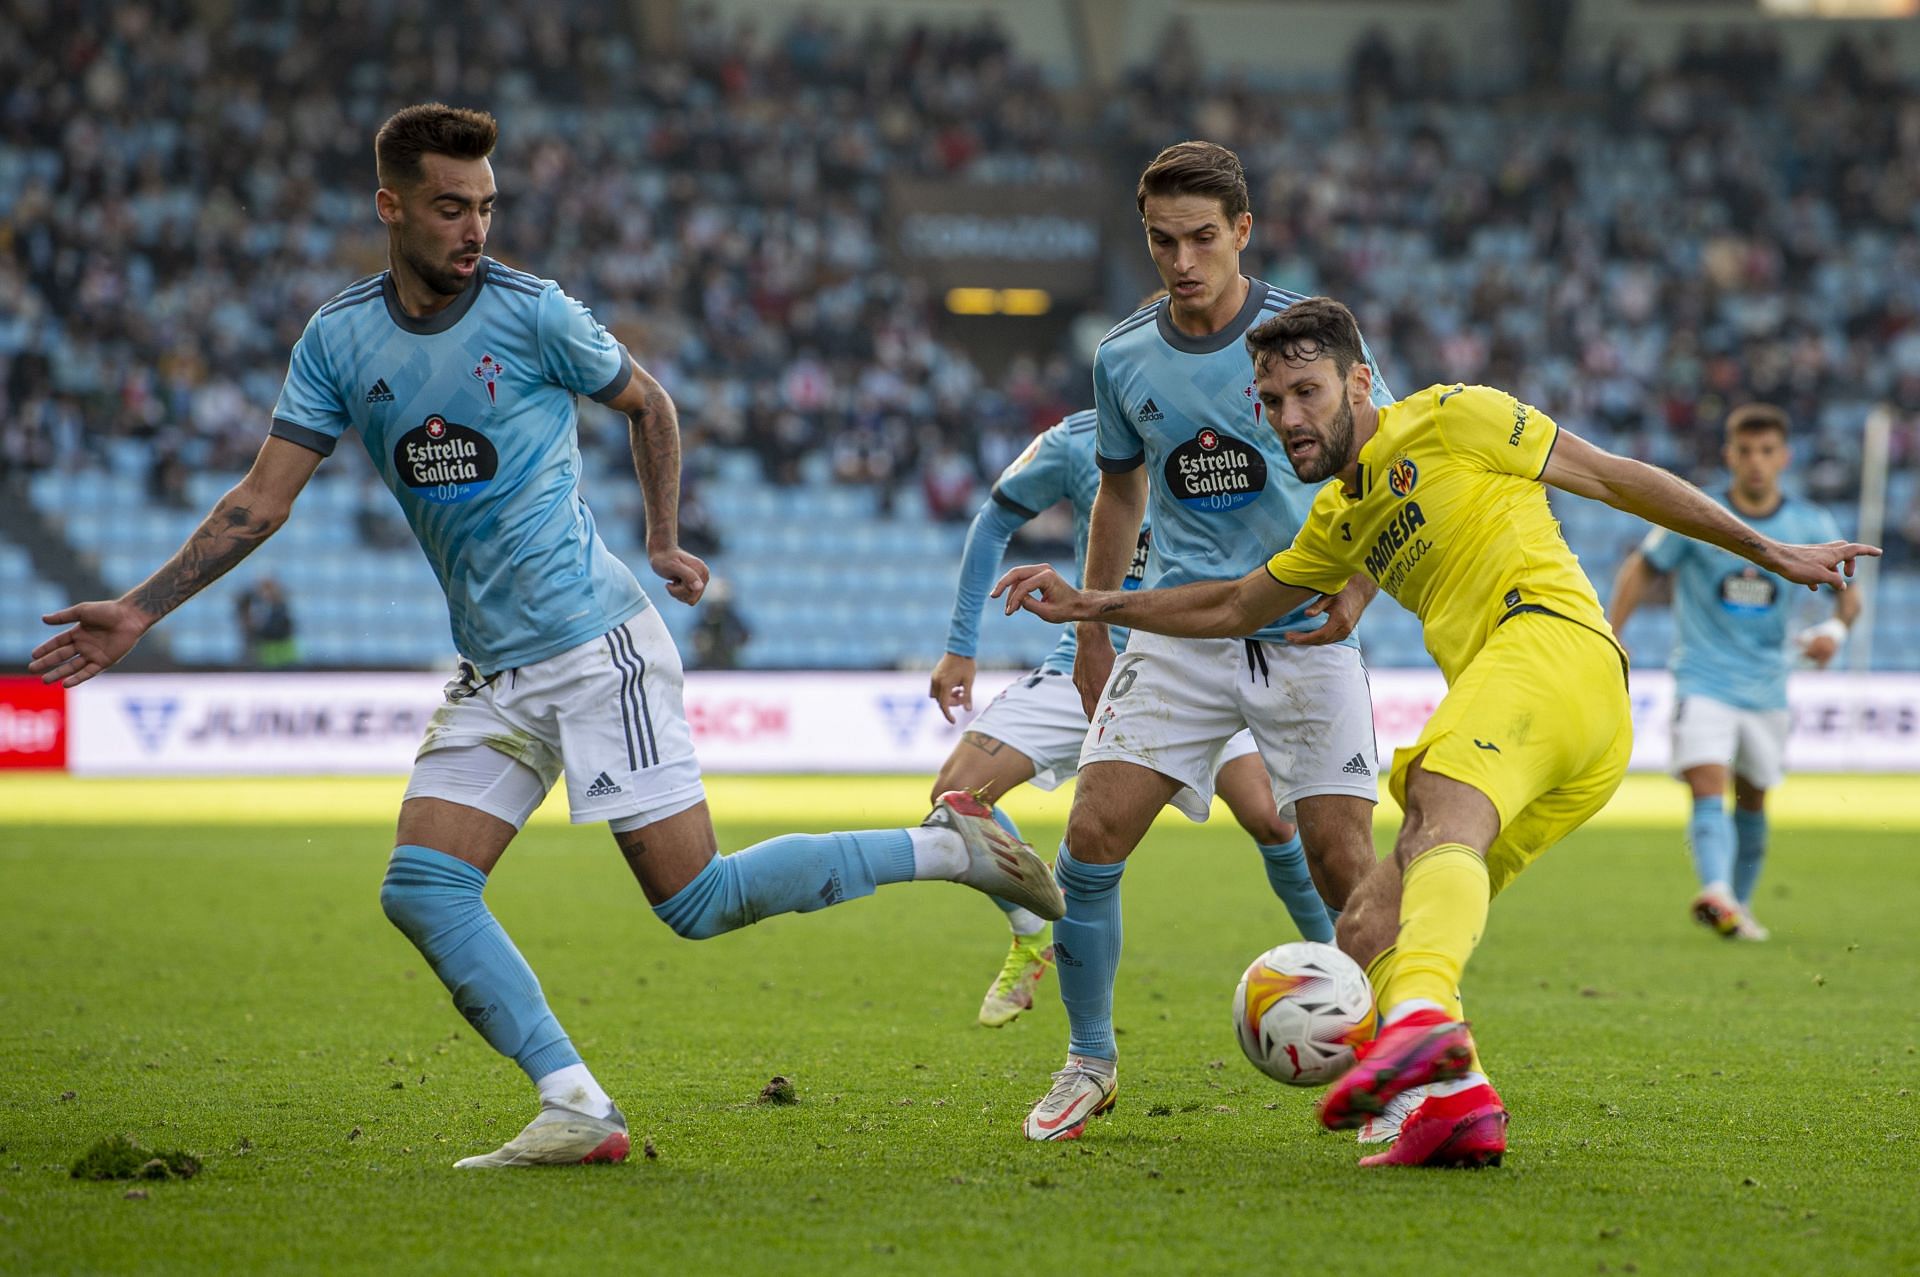 Villarreal take on Celta Vigo this weekend